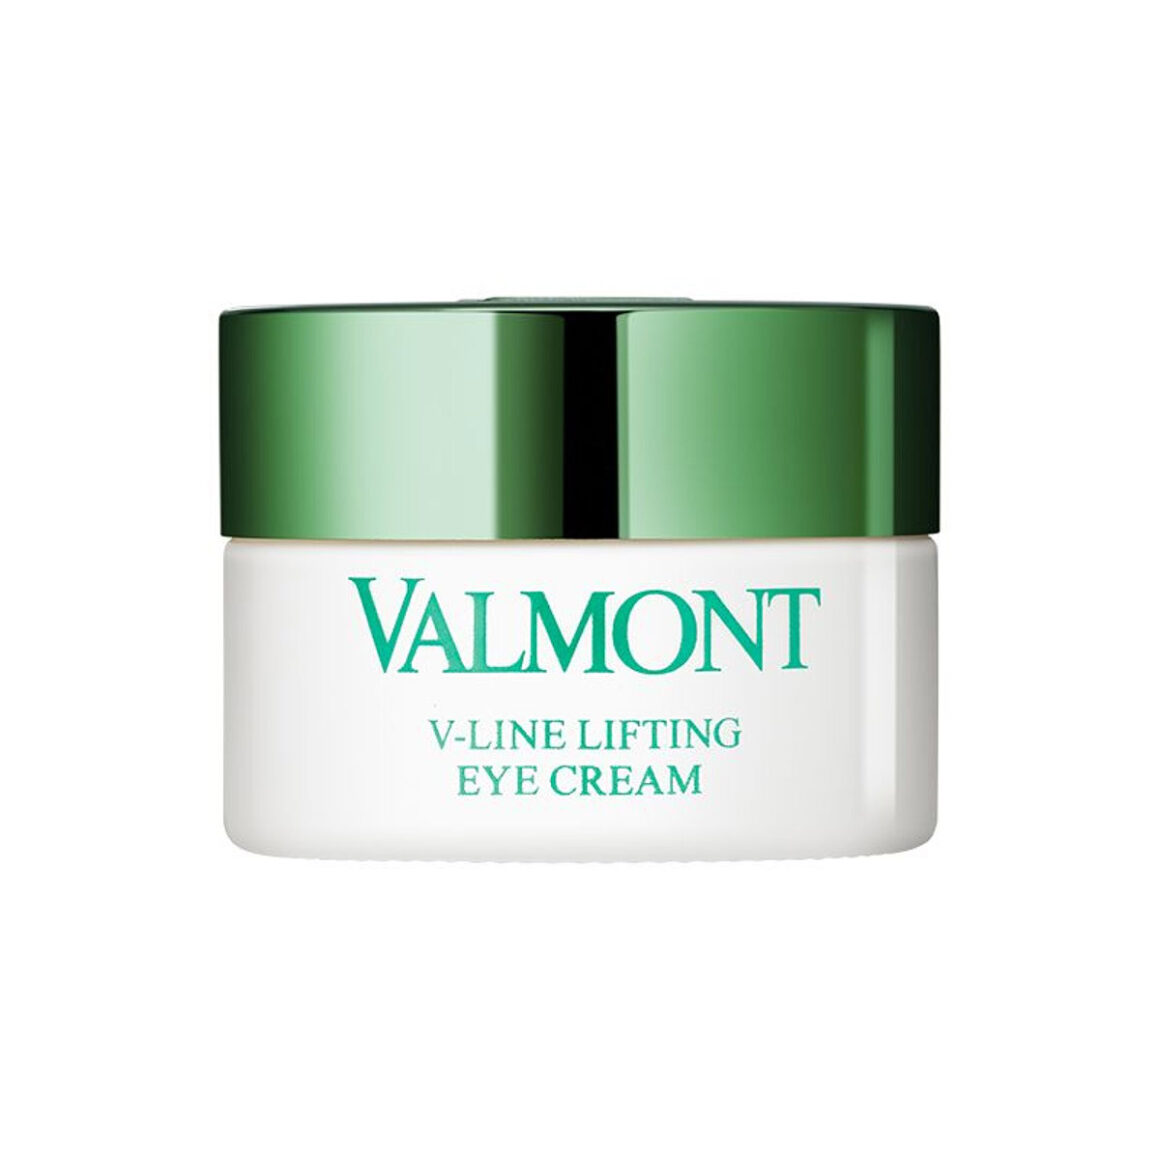 Valmont | V-Line Lifting Eye Cream